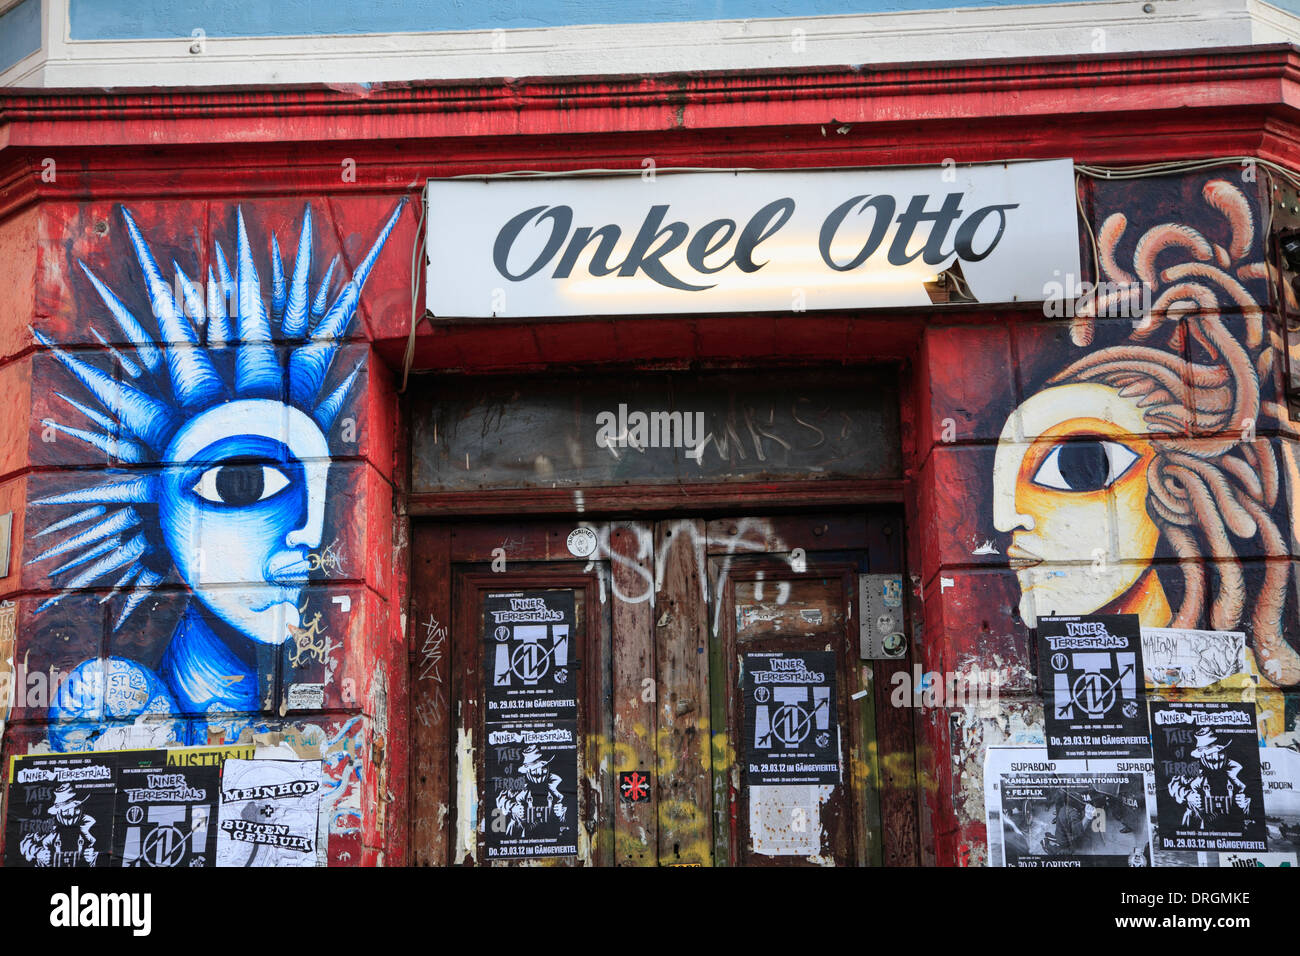 Graffiti, Bar ONKEL OTTO at Hafentreppe, St. Pauli quarter, Hamburg, Germany, Europe Stock Photo